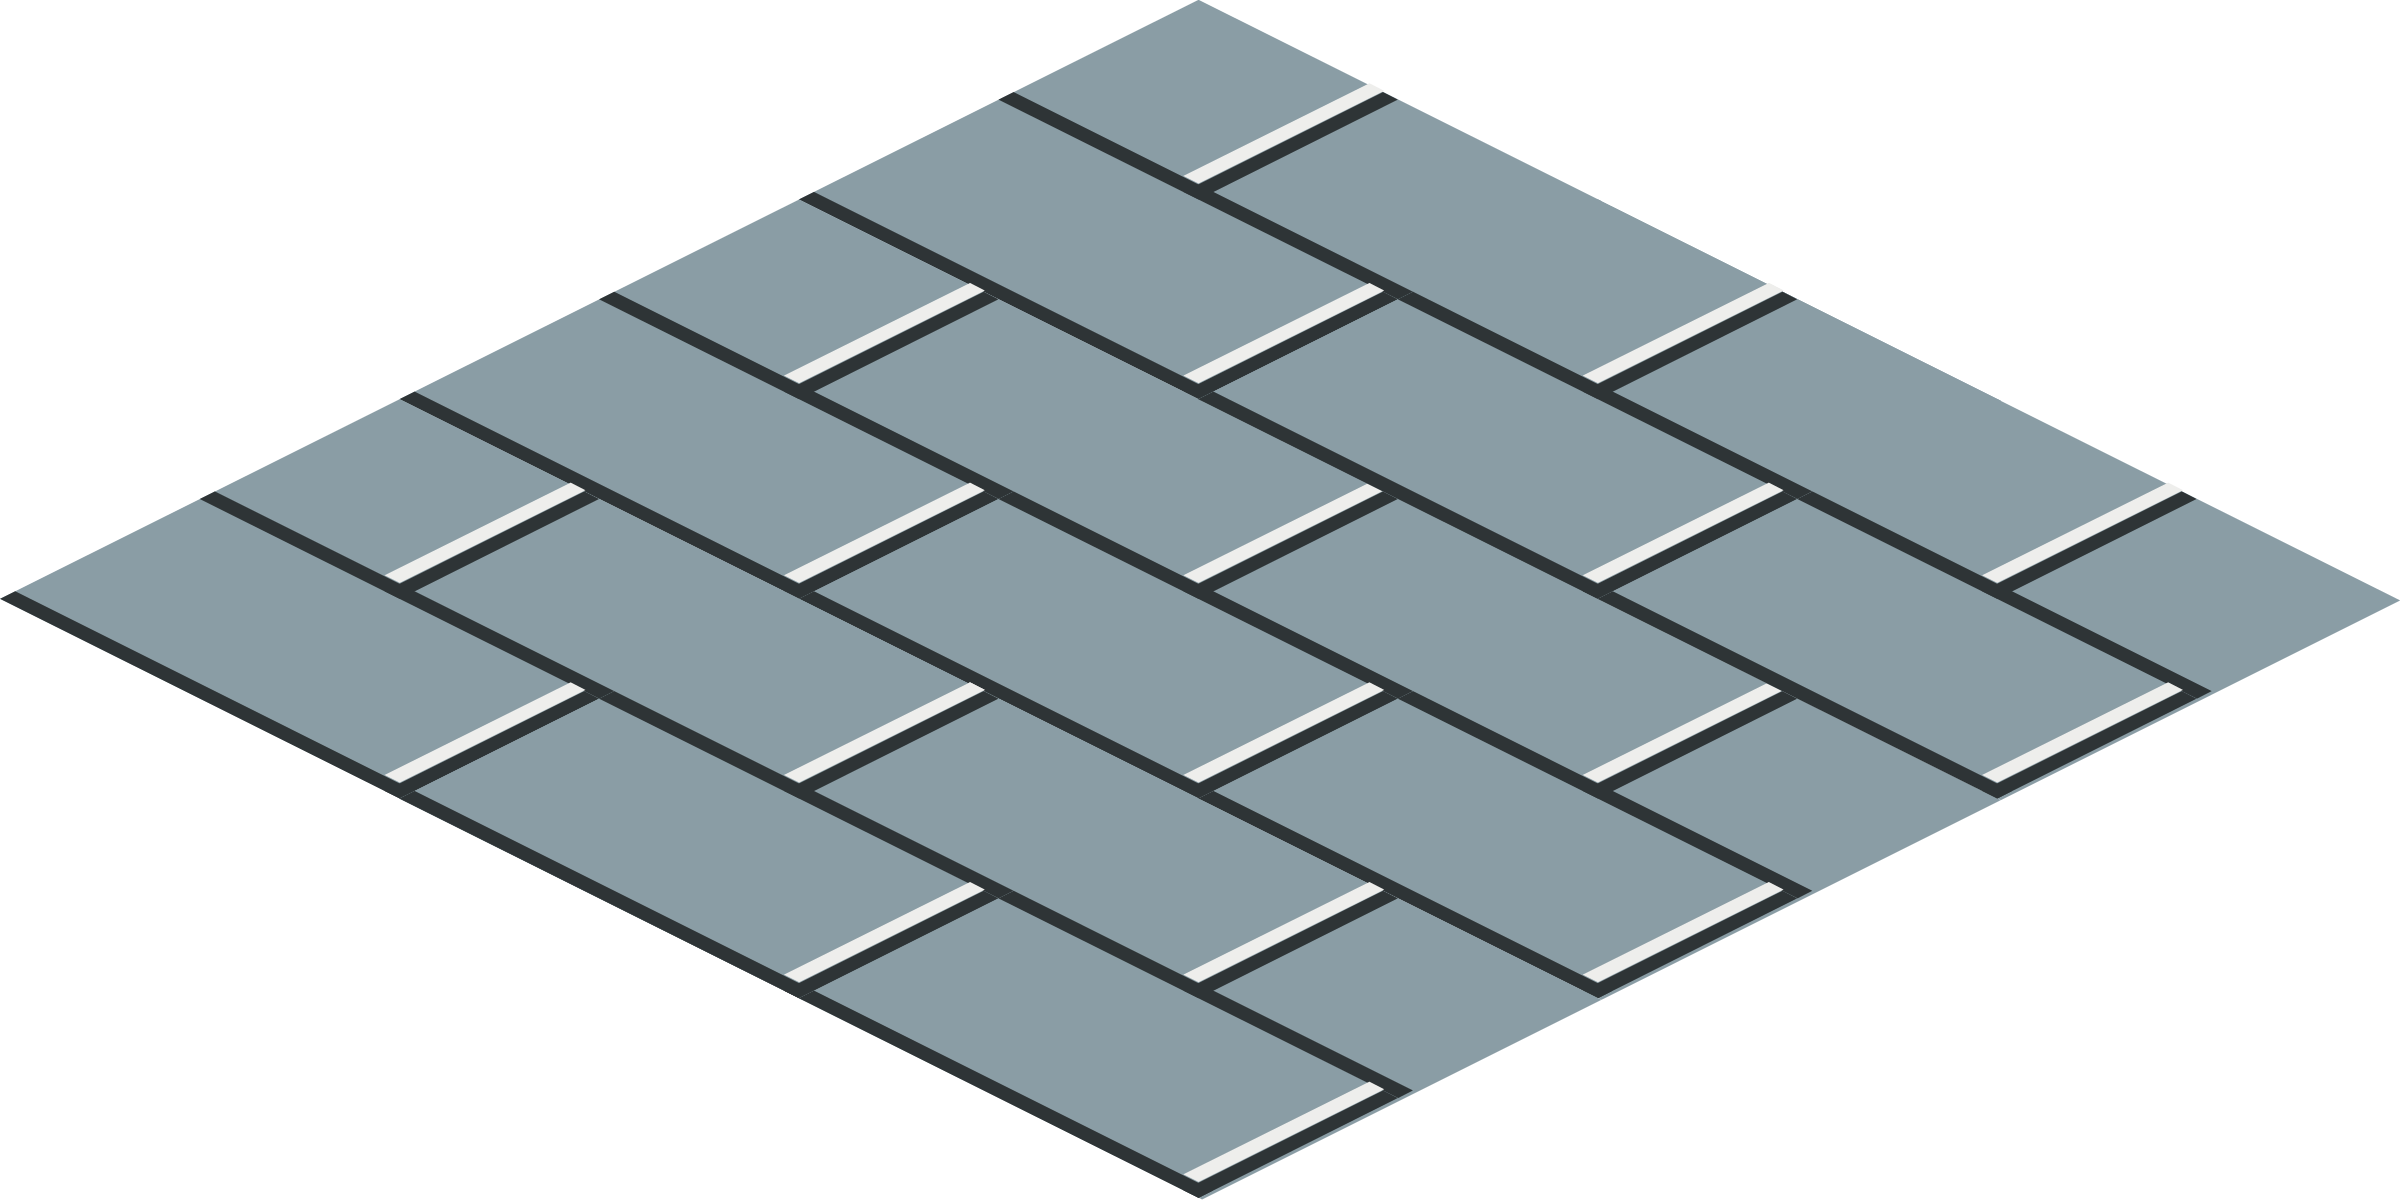 floor clipart black square tile